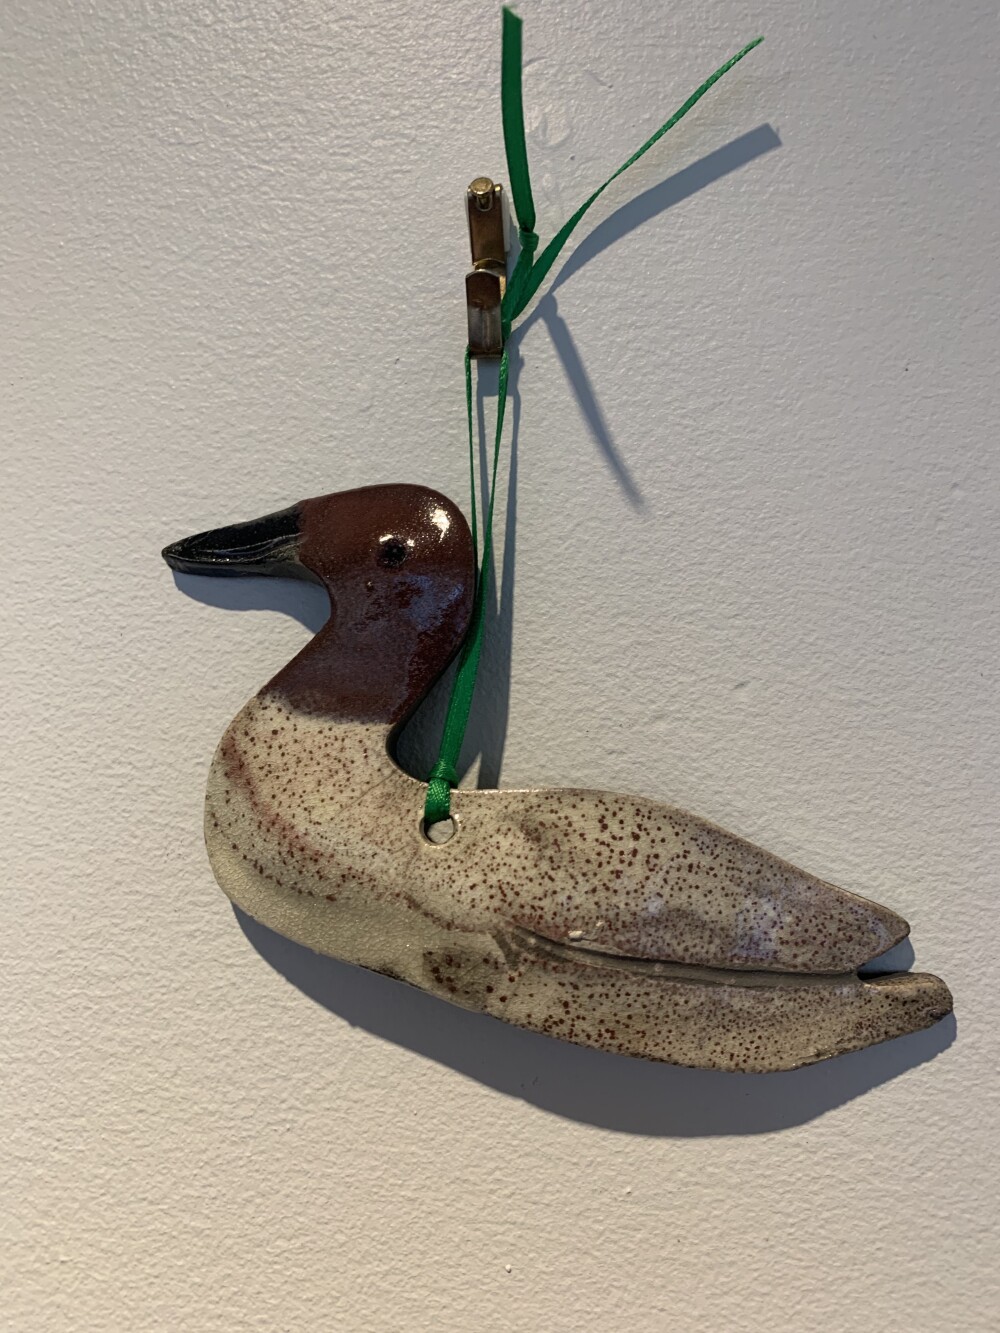 Duck - Raku Pottery Ornament